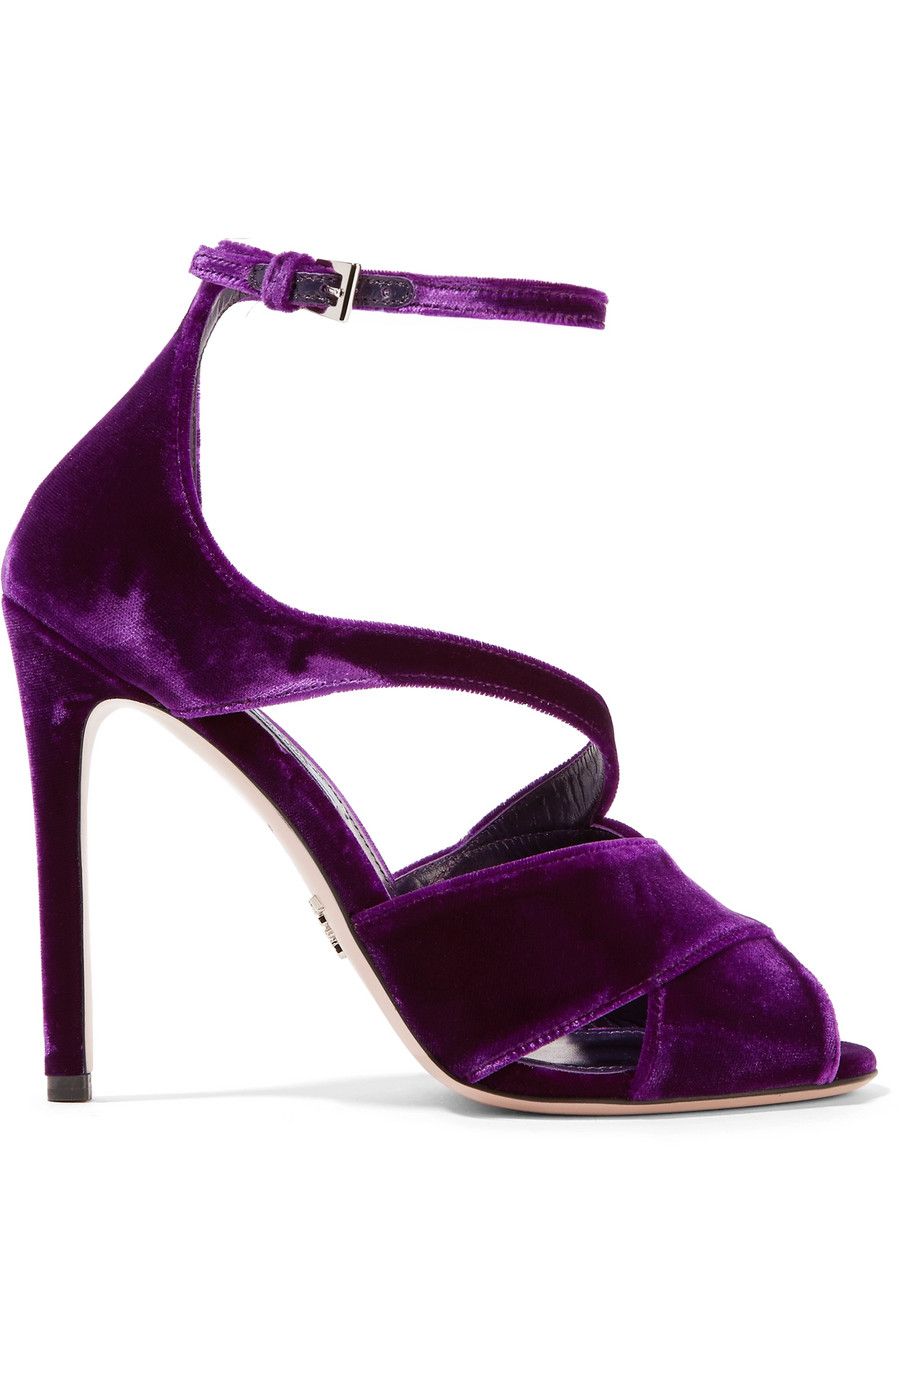 Footwear, Purple, Violet, High heels, Sandal, Shoe, Basic pump, Magenta, Slingback, Leather, 